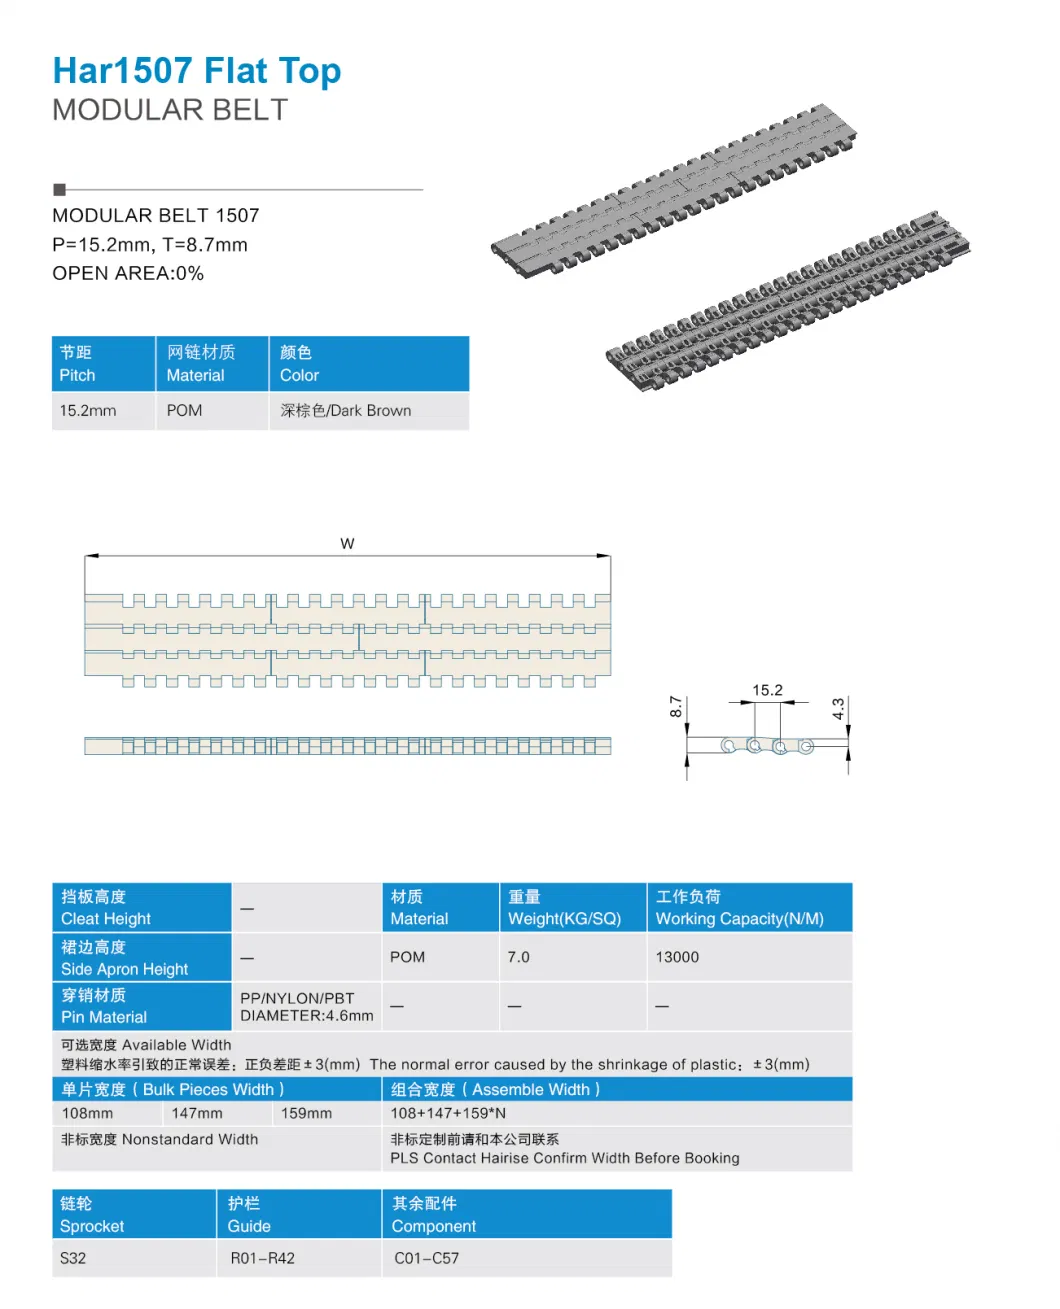 High Quality Har1507 Series Material POM/PP Flat Top Conveyor Belting Modular Belt Wtih FDA&amp; Gsg Certificate